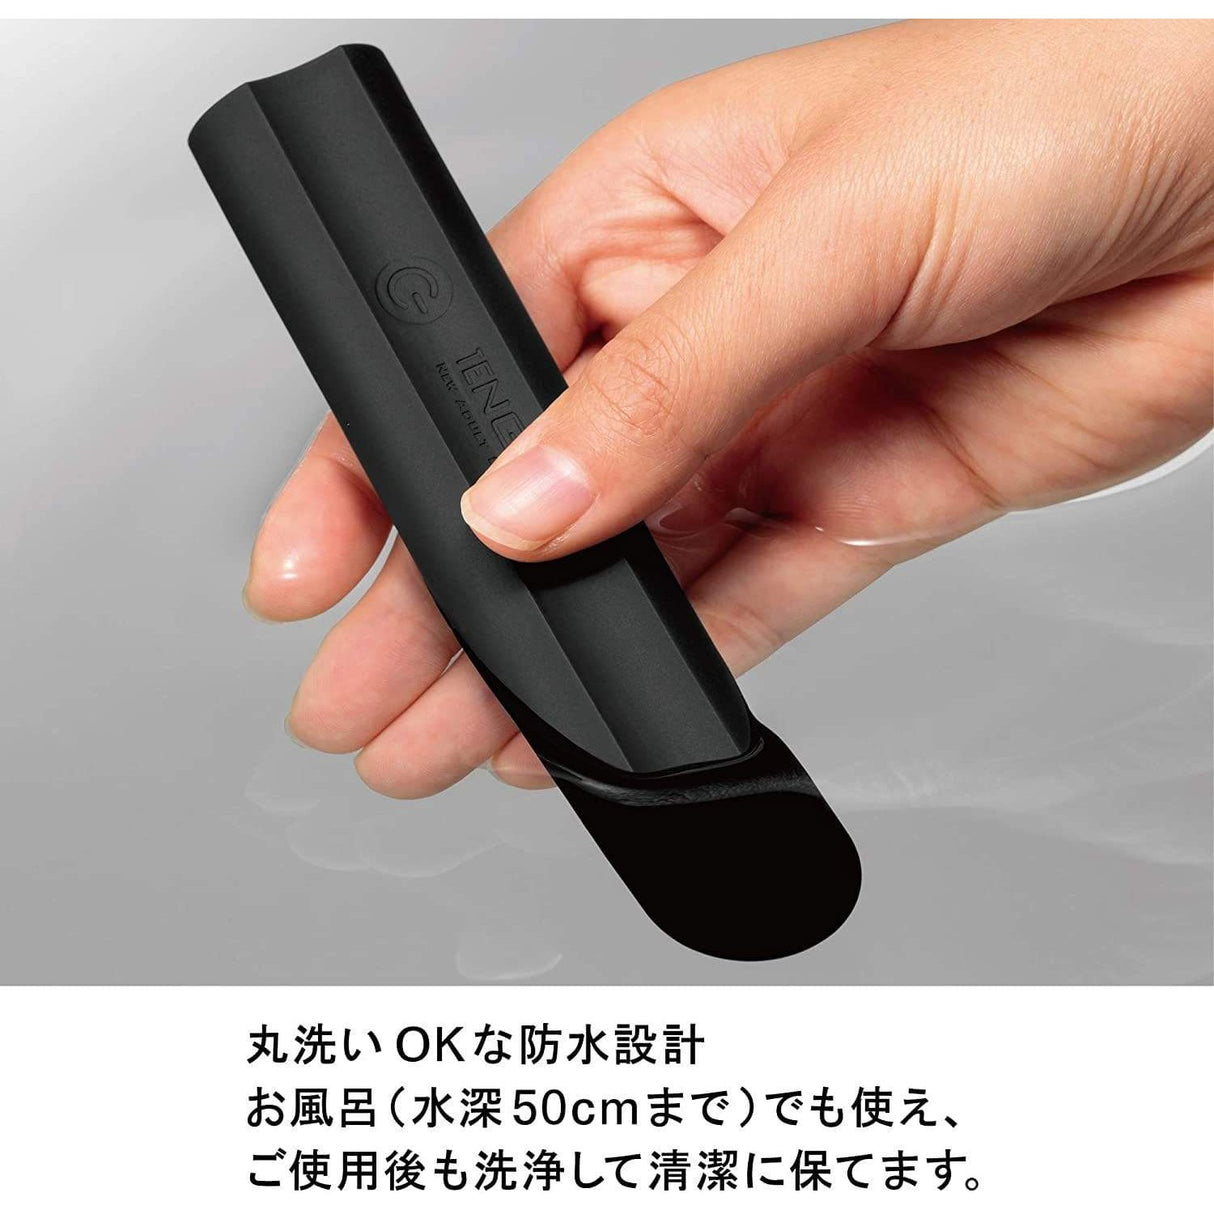 Tenga - SVS Smart Vibe Stick Rechargeable Vibrator (Pearl White) TE1146 CherryAffairs